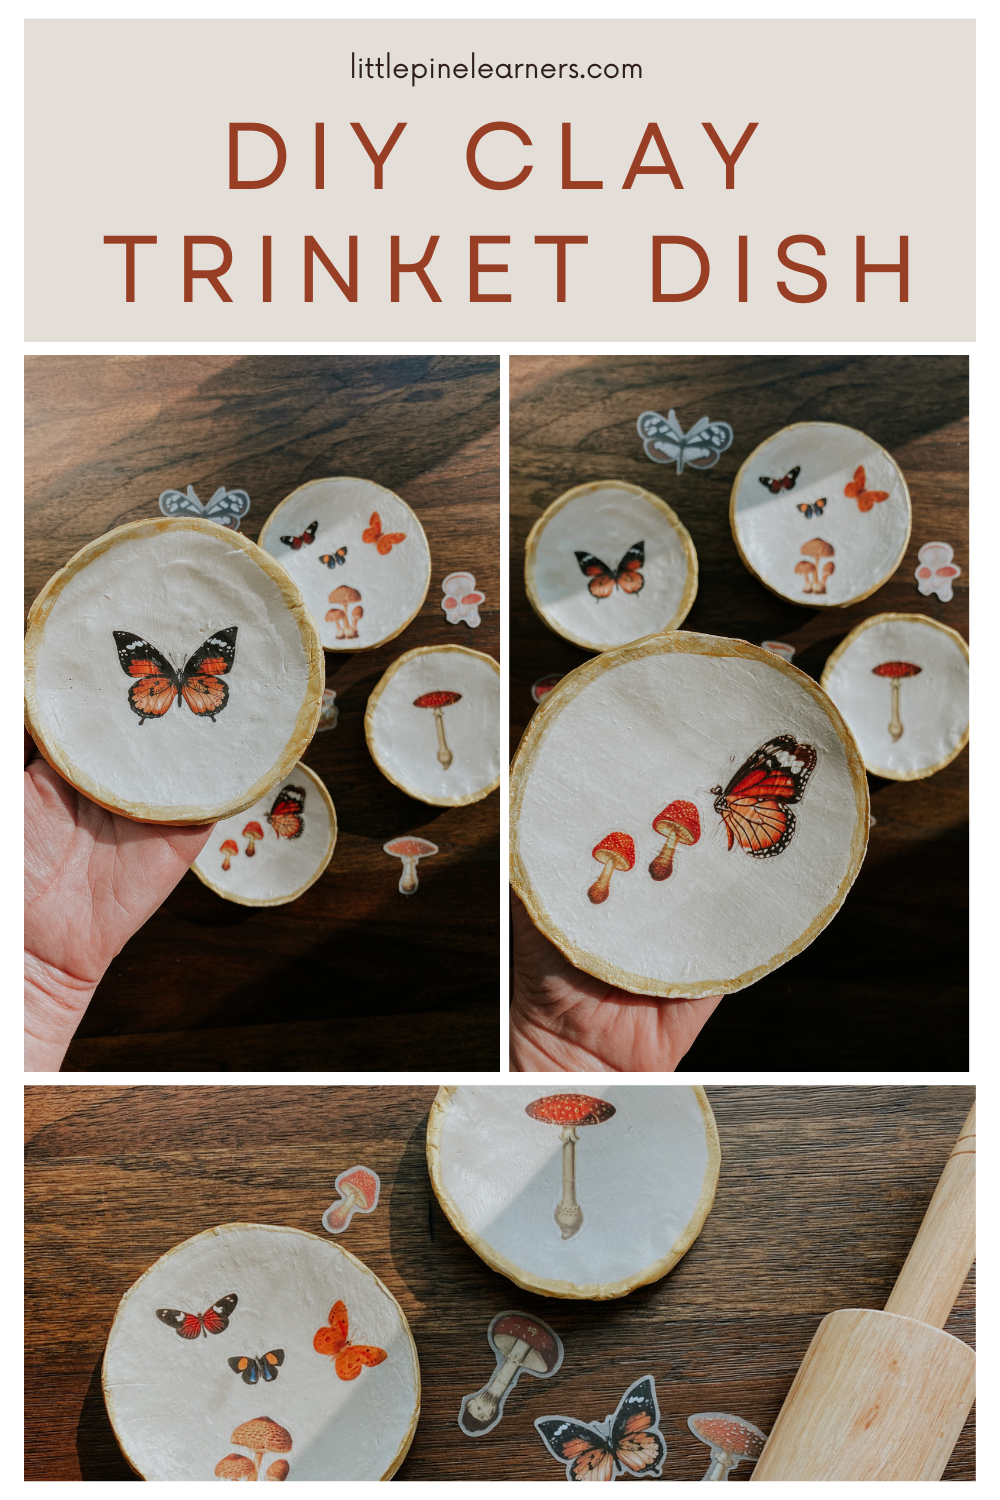 DIY Clay Trinket Dish